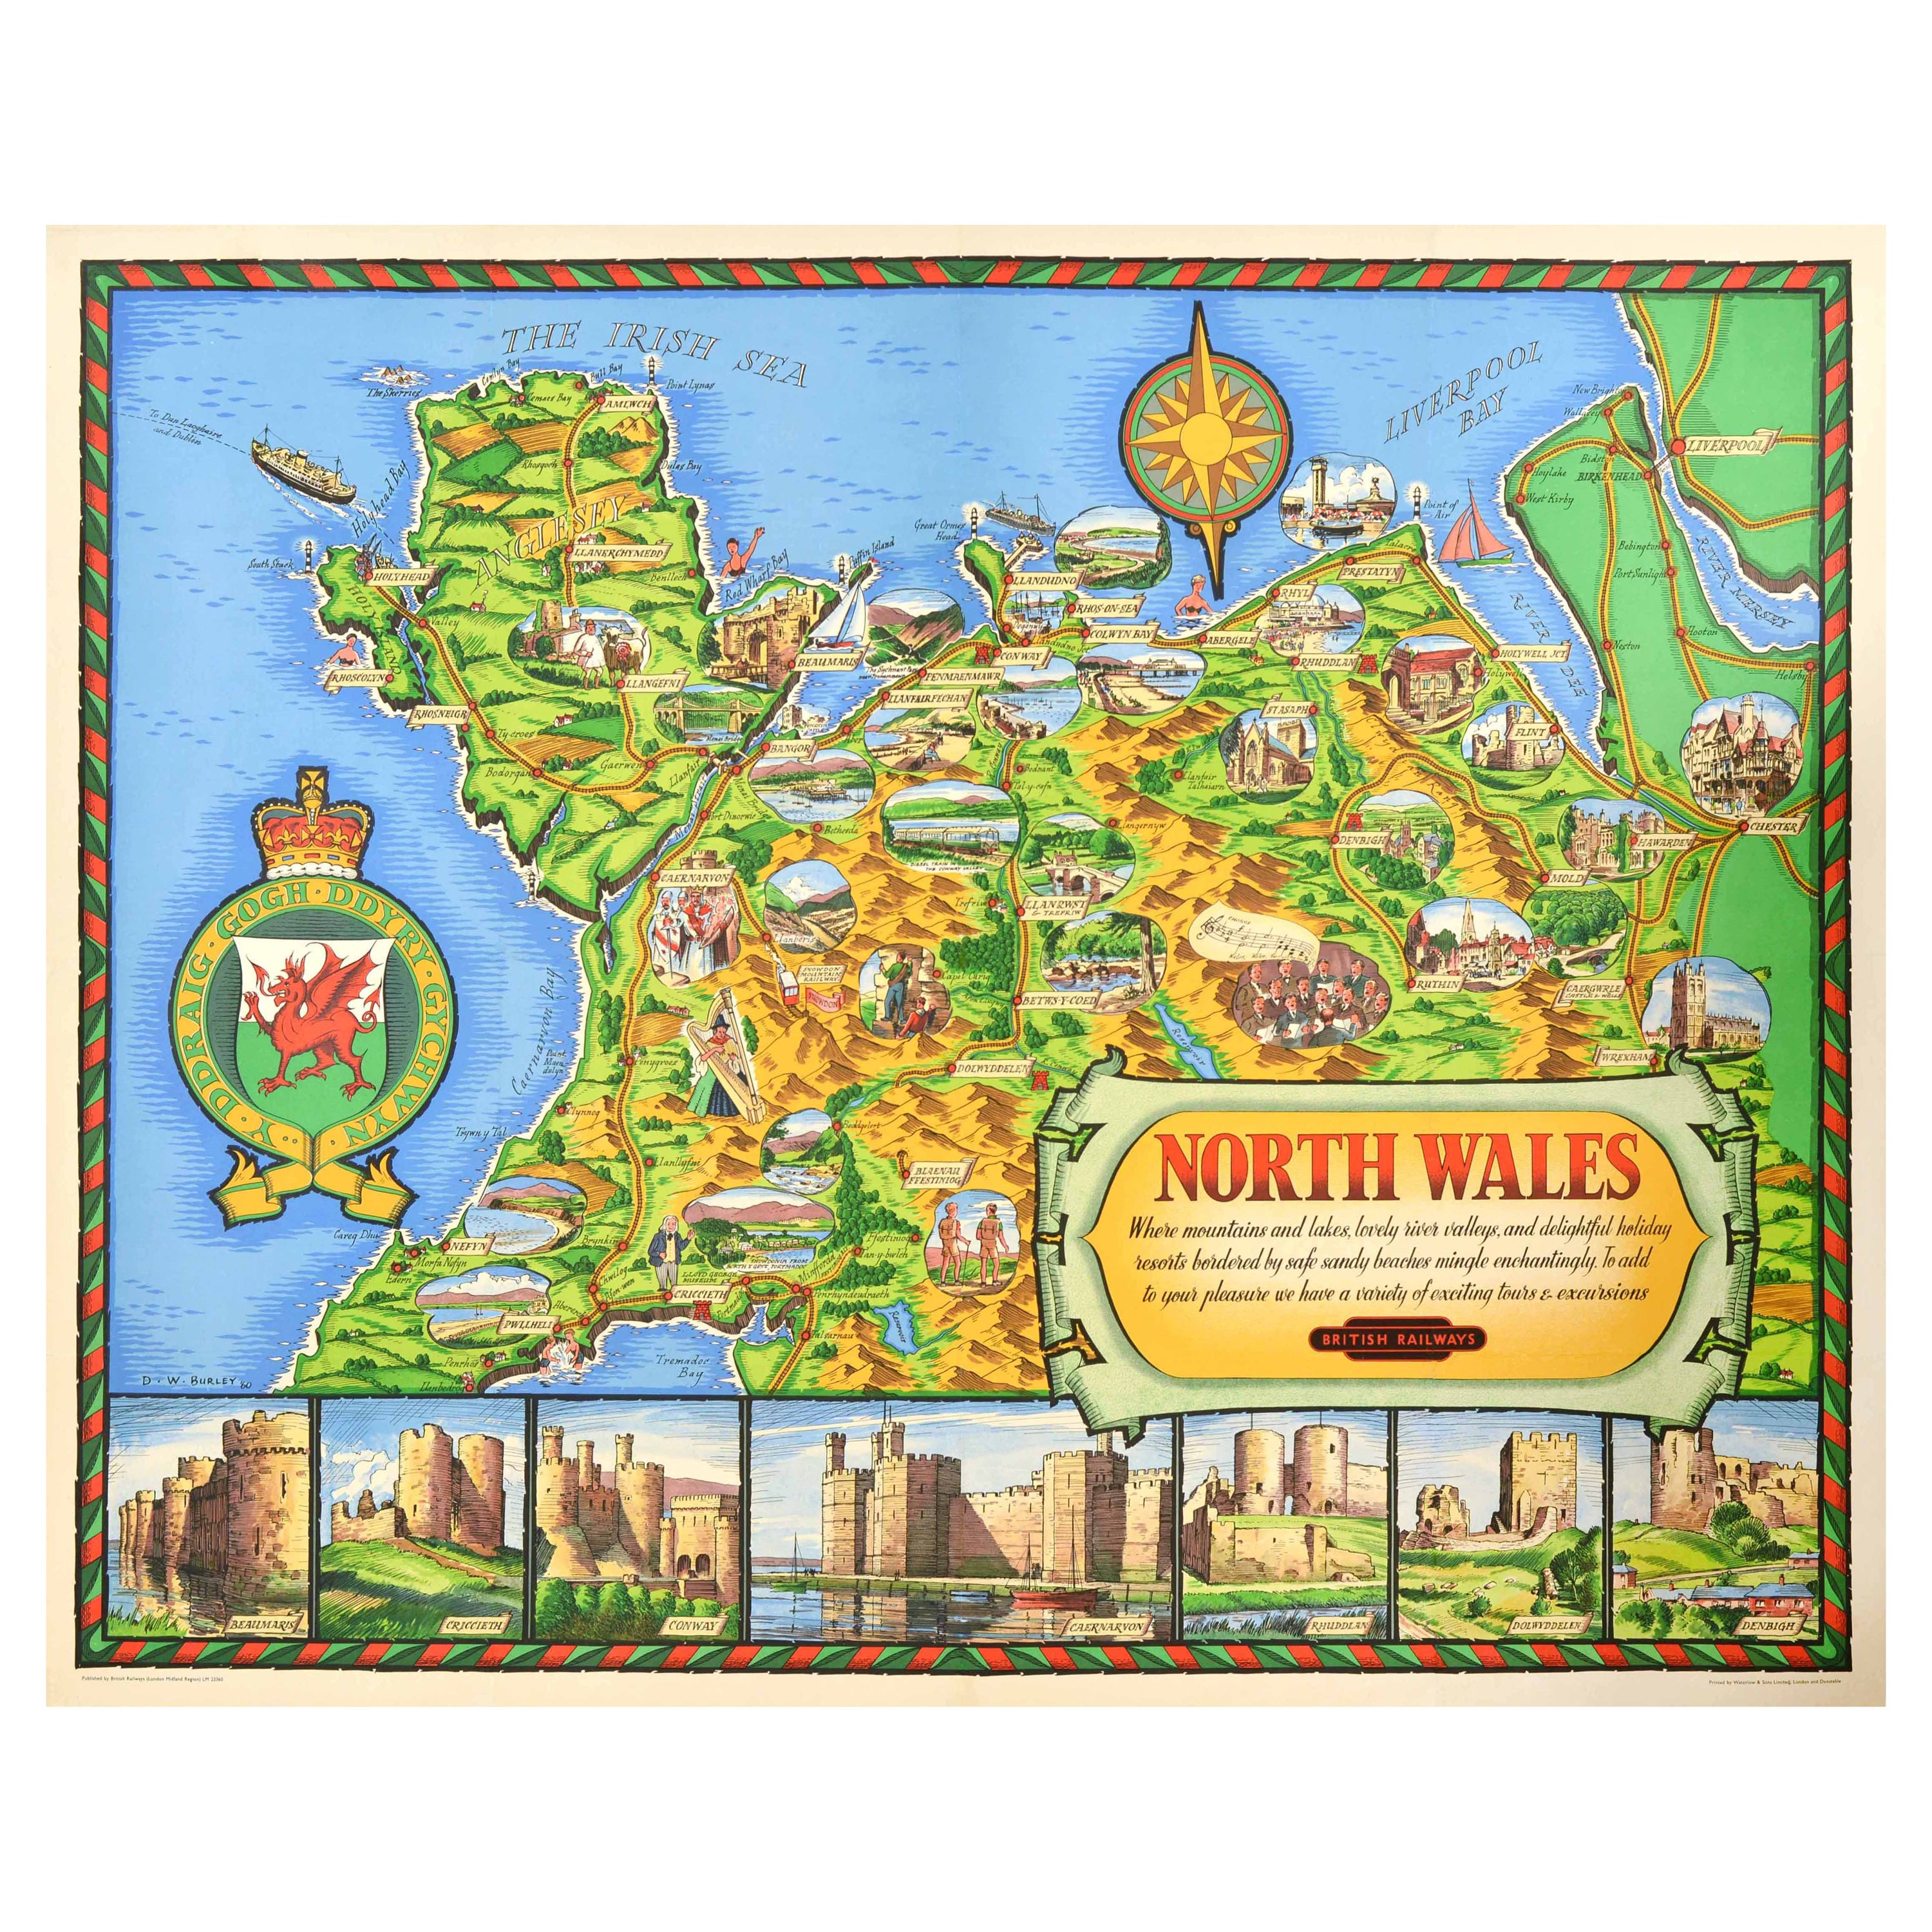 Original Vintage Travel Poster North Wales Map British Railways DW Burley For Sale